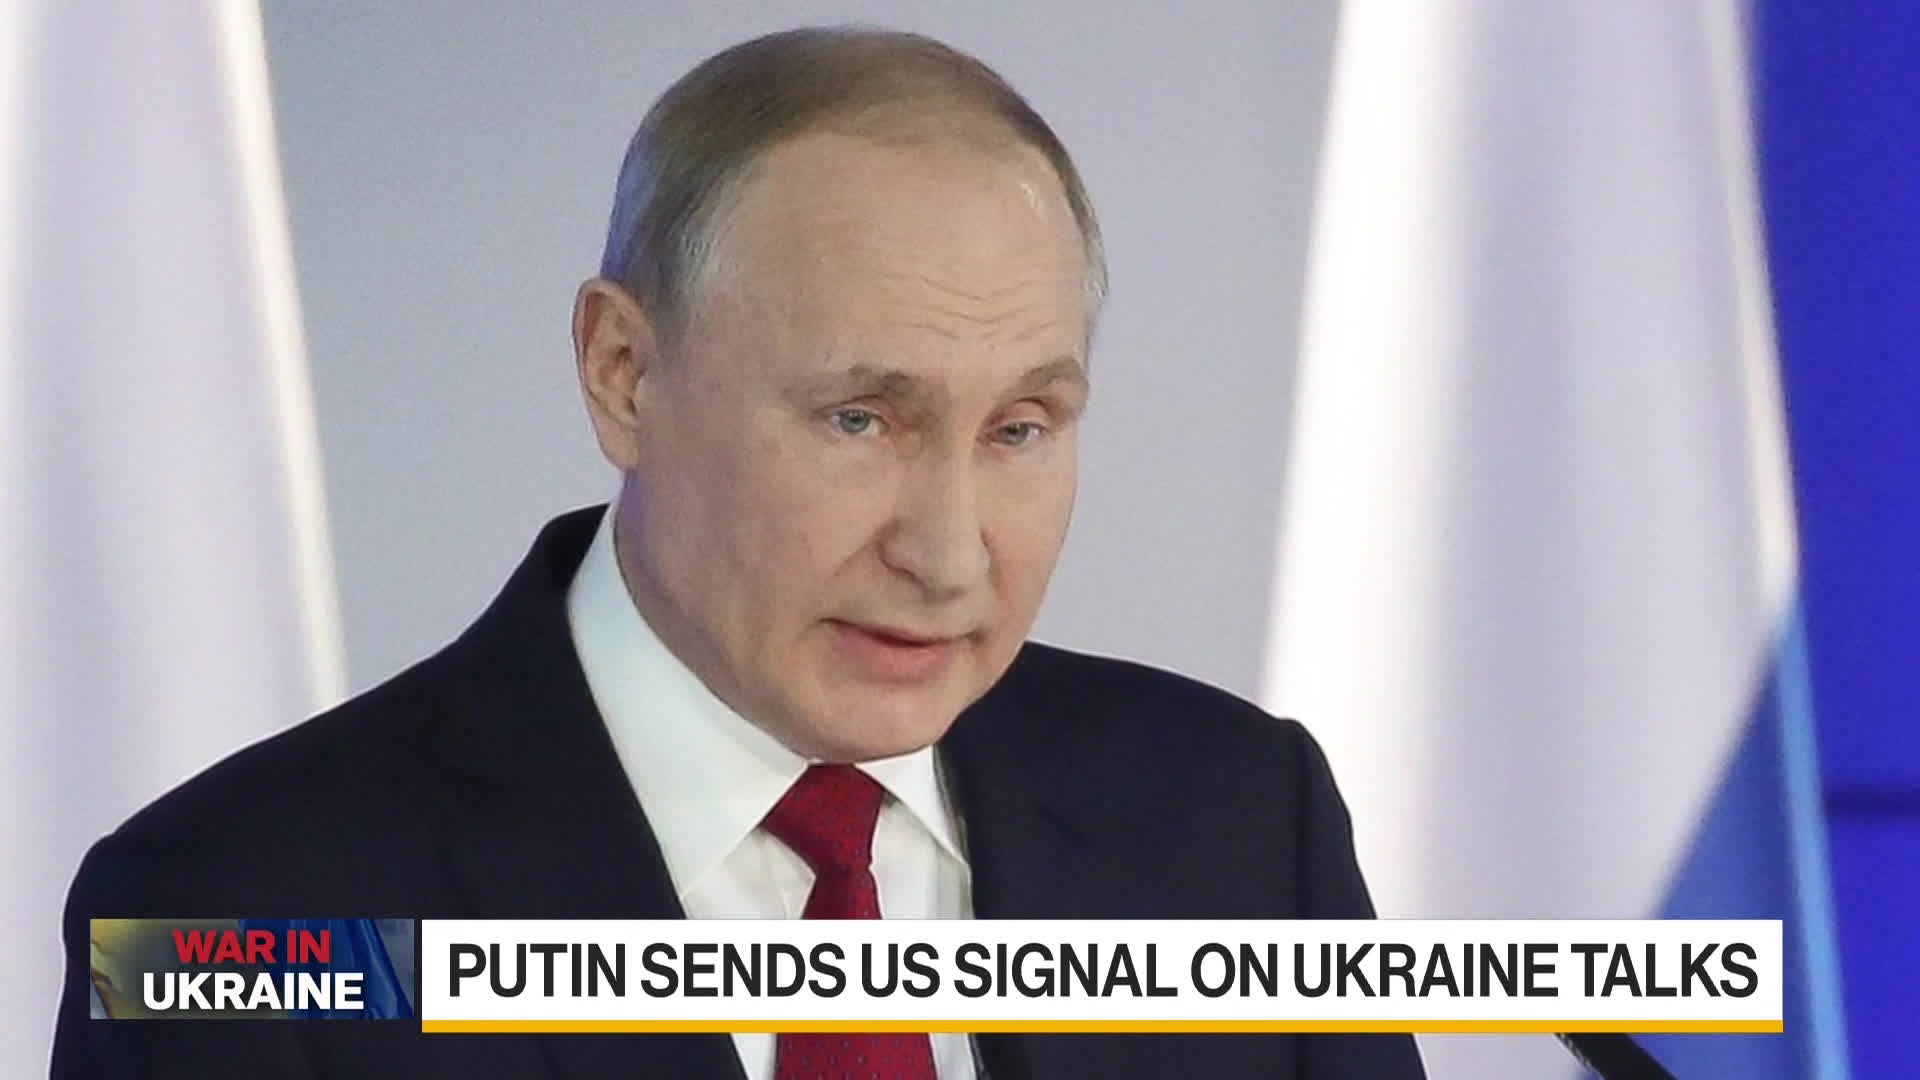 Russia-Ukraine: Putin Signals Interest in Discussing End to War - Bloomberg